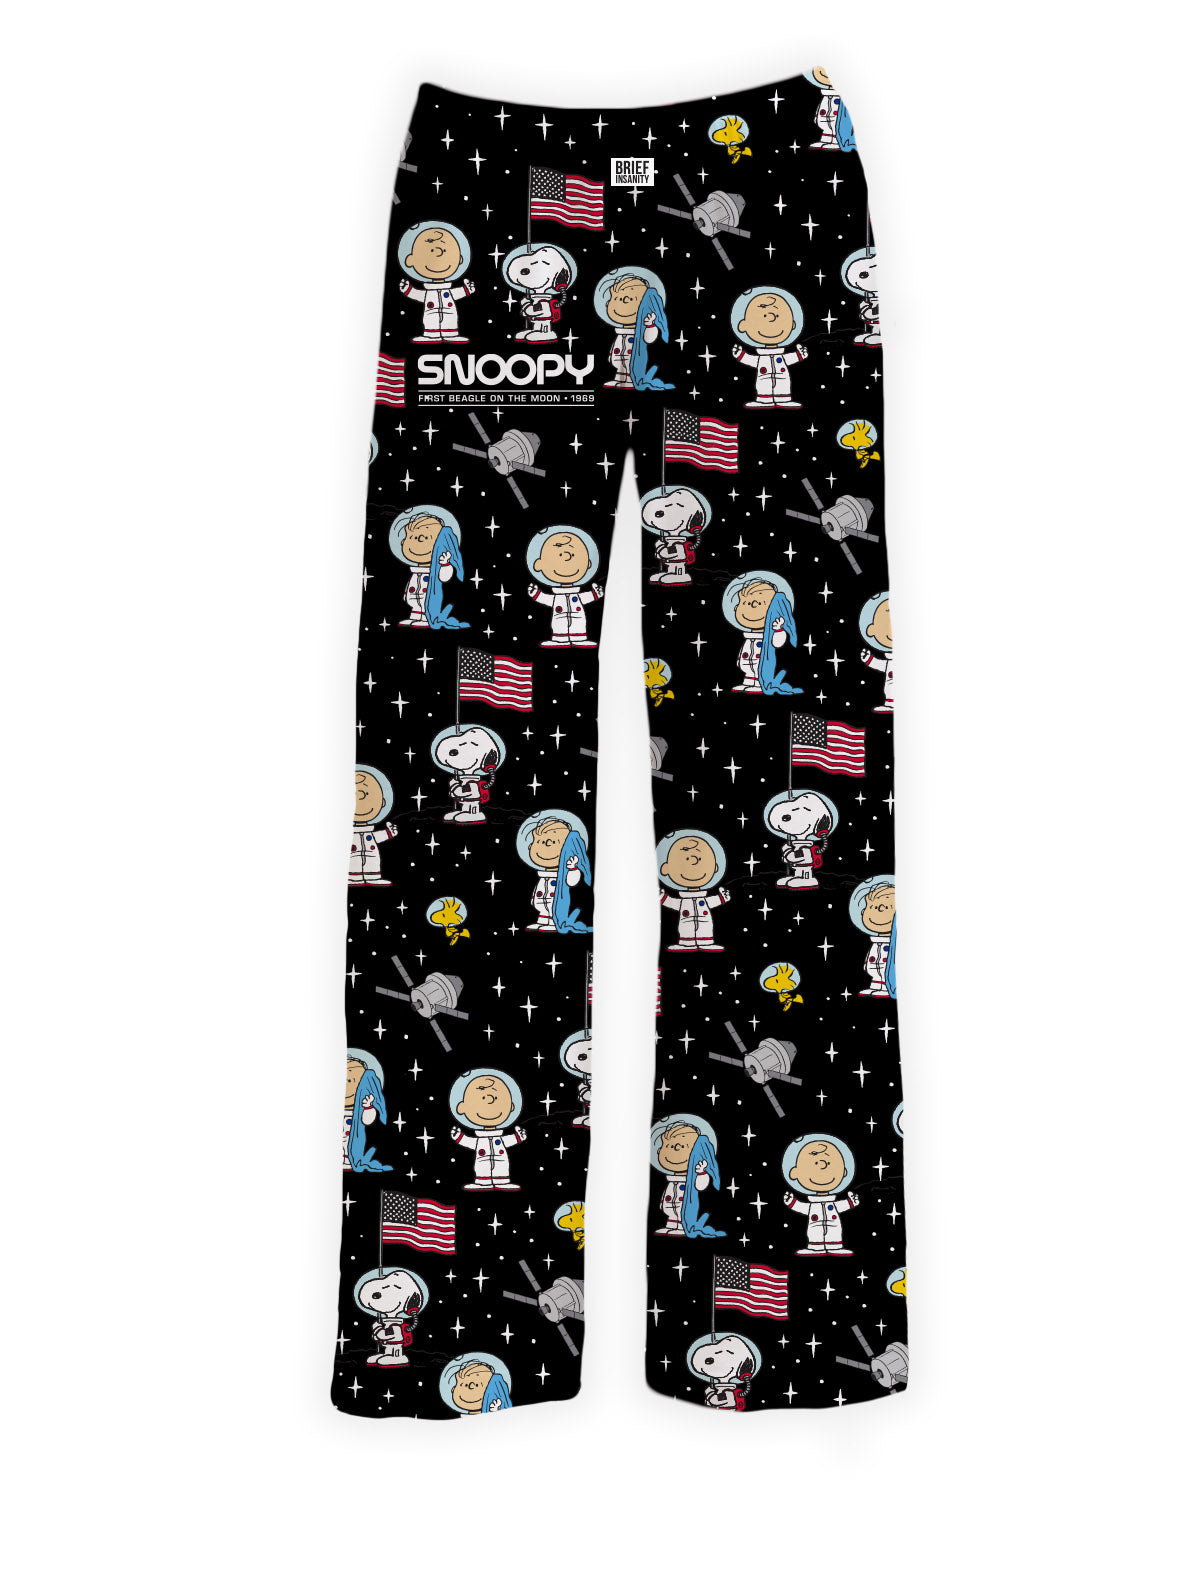 BRIEF INSANITY Snoopy Space Pajama Lounge Pants